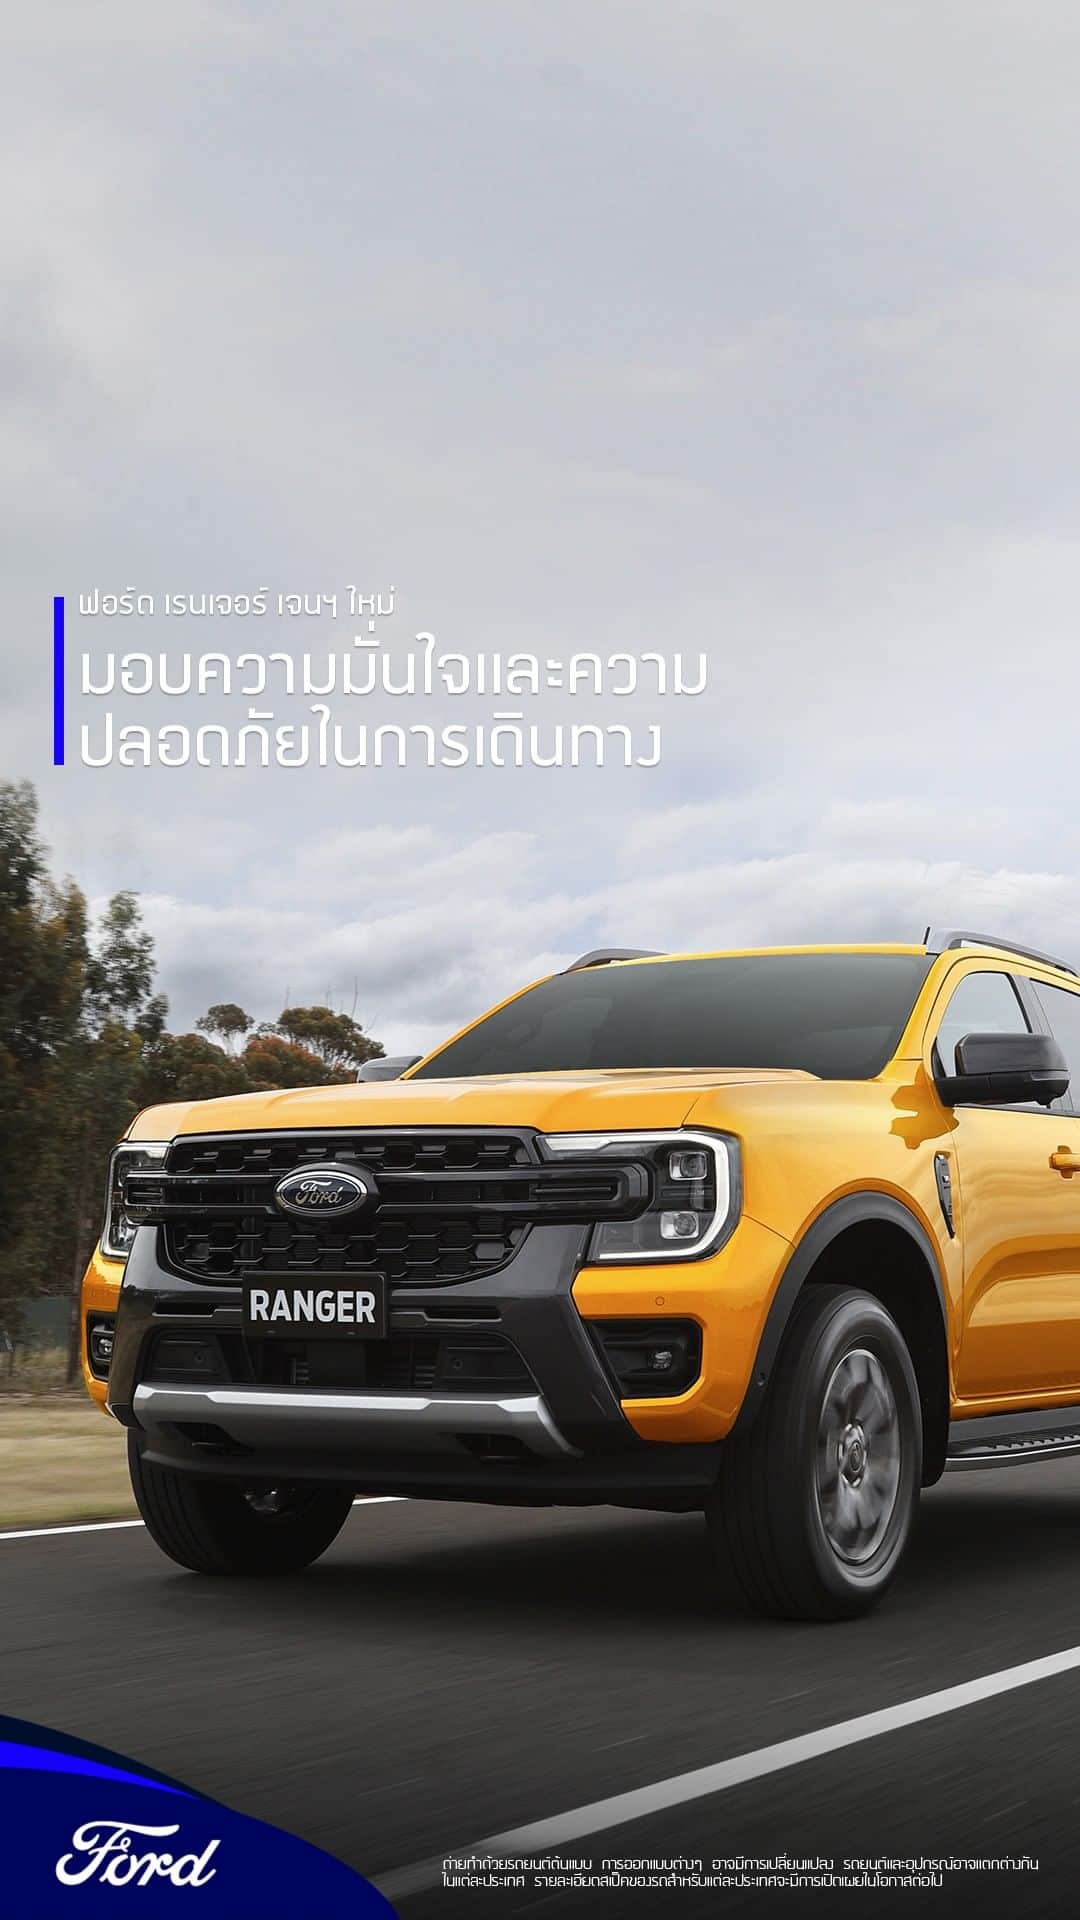 Ford Thailandのインスタグラム：「ความปลอดภัยคือสิ่งสำคัญเสมอ ไม่ว่าคุณจะใช้รถเพื่อการทำงาน ใช้เป็นรถครอบครัว หรือใช้เดินทางท่องเที่ยว #NextGenRanger มอบเทคโนโลยีความปลอดภัยล่าสุดในการป้องกันการเกิดเหตุ และปกป้องผู้โดยสารภายในรถ เพิ่มความมั่นใจให้กับคุณทุกครั้งที่อยู่บนถนน」